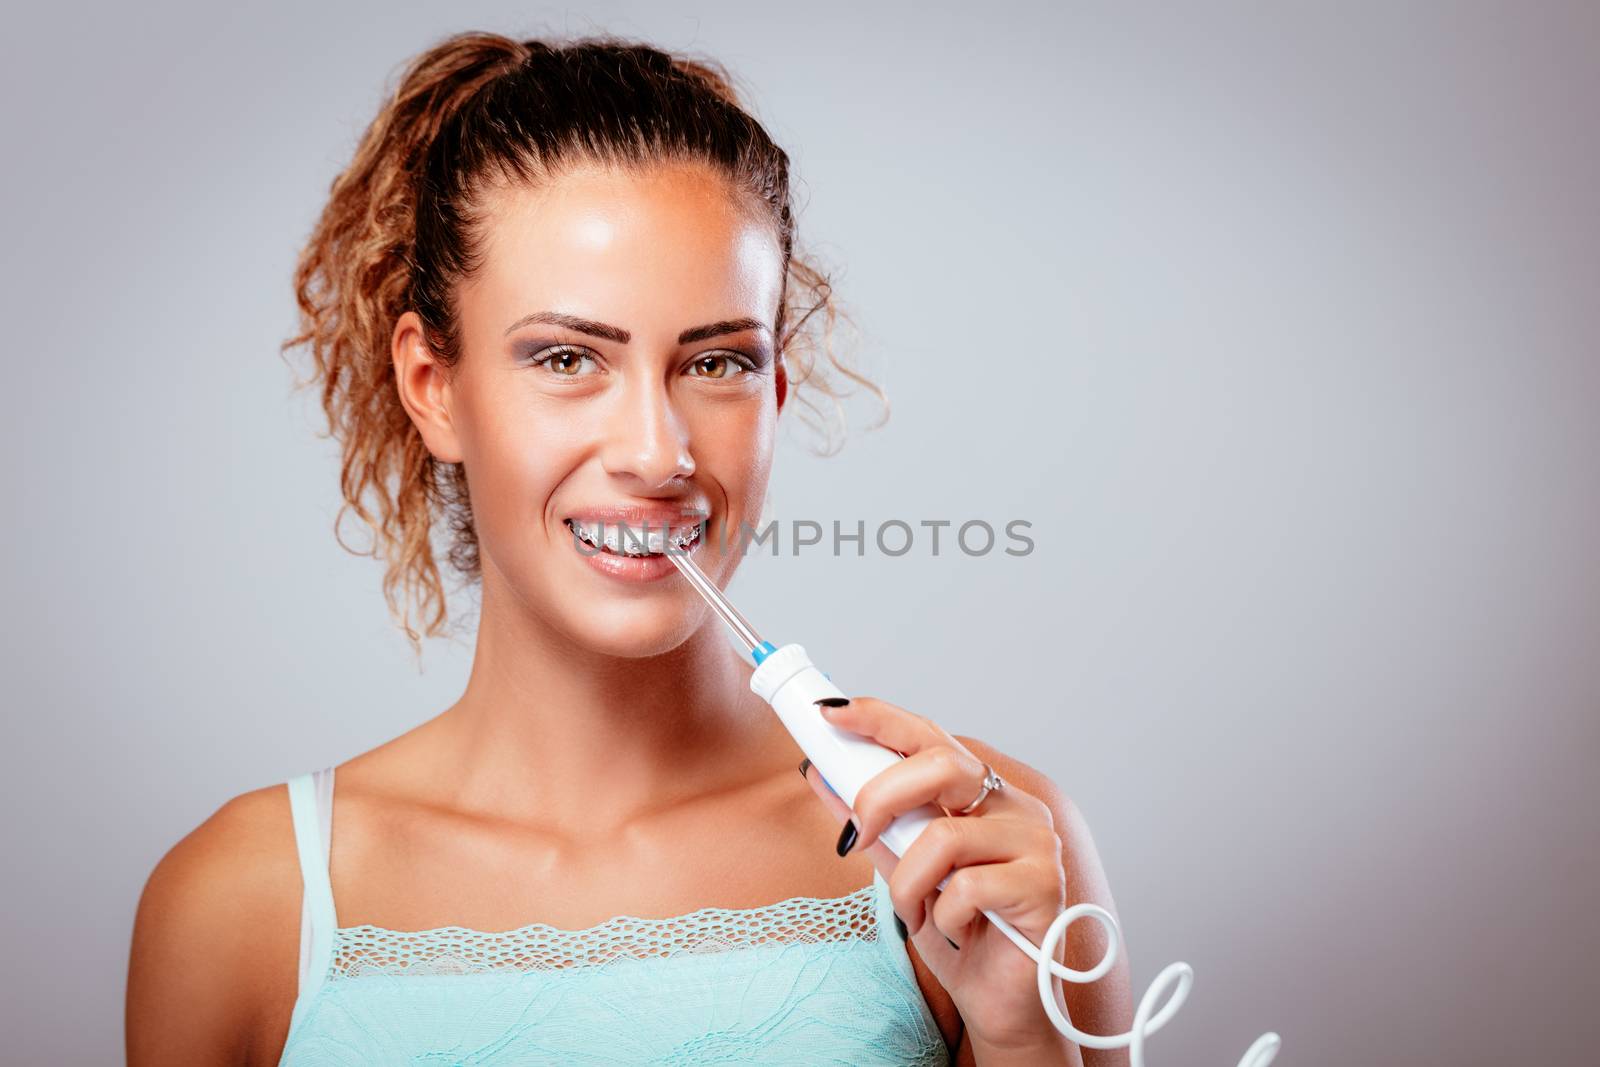 Brushing Teeth With Tooth Irrigator by MilanMarkovic78